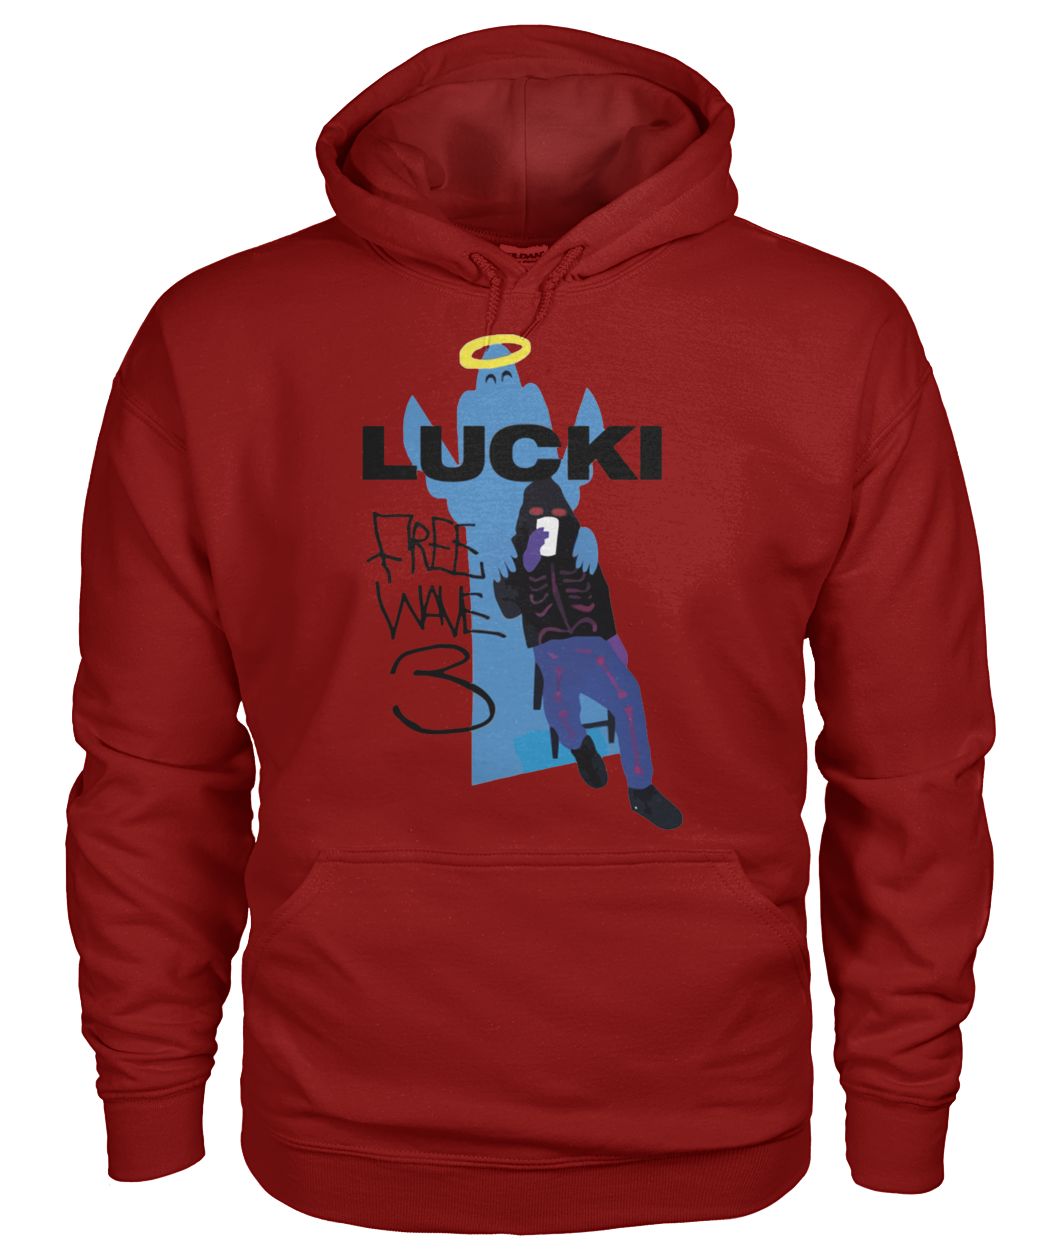 Lucki 'freewave 3' lucki free wave 3 gildan hoodie